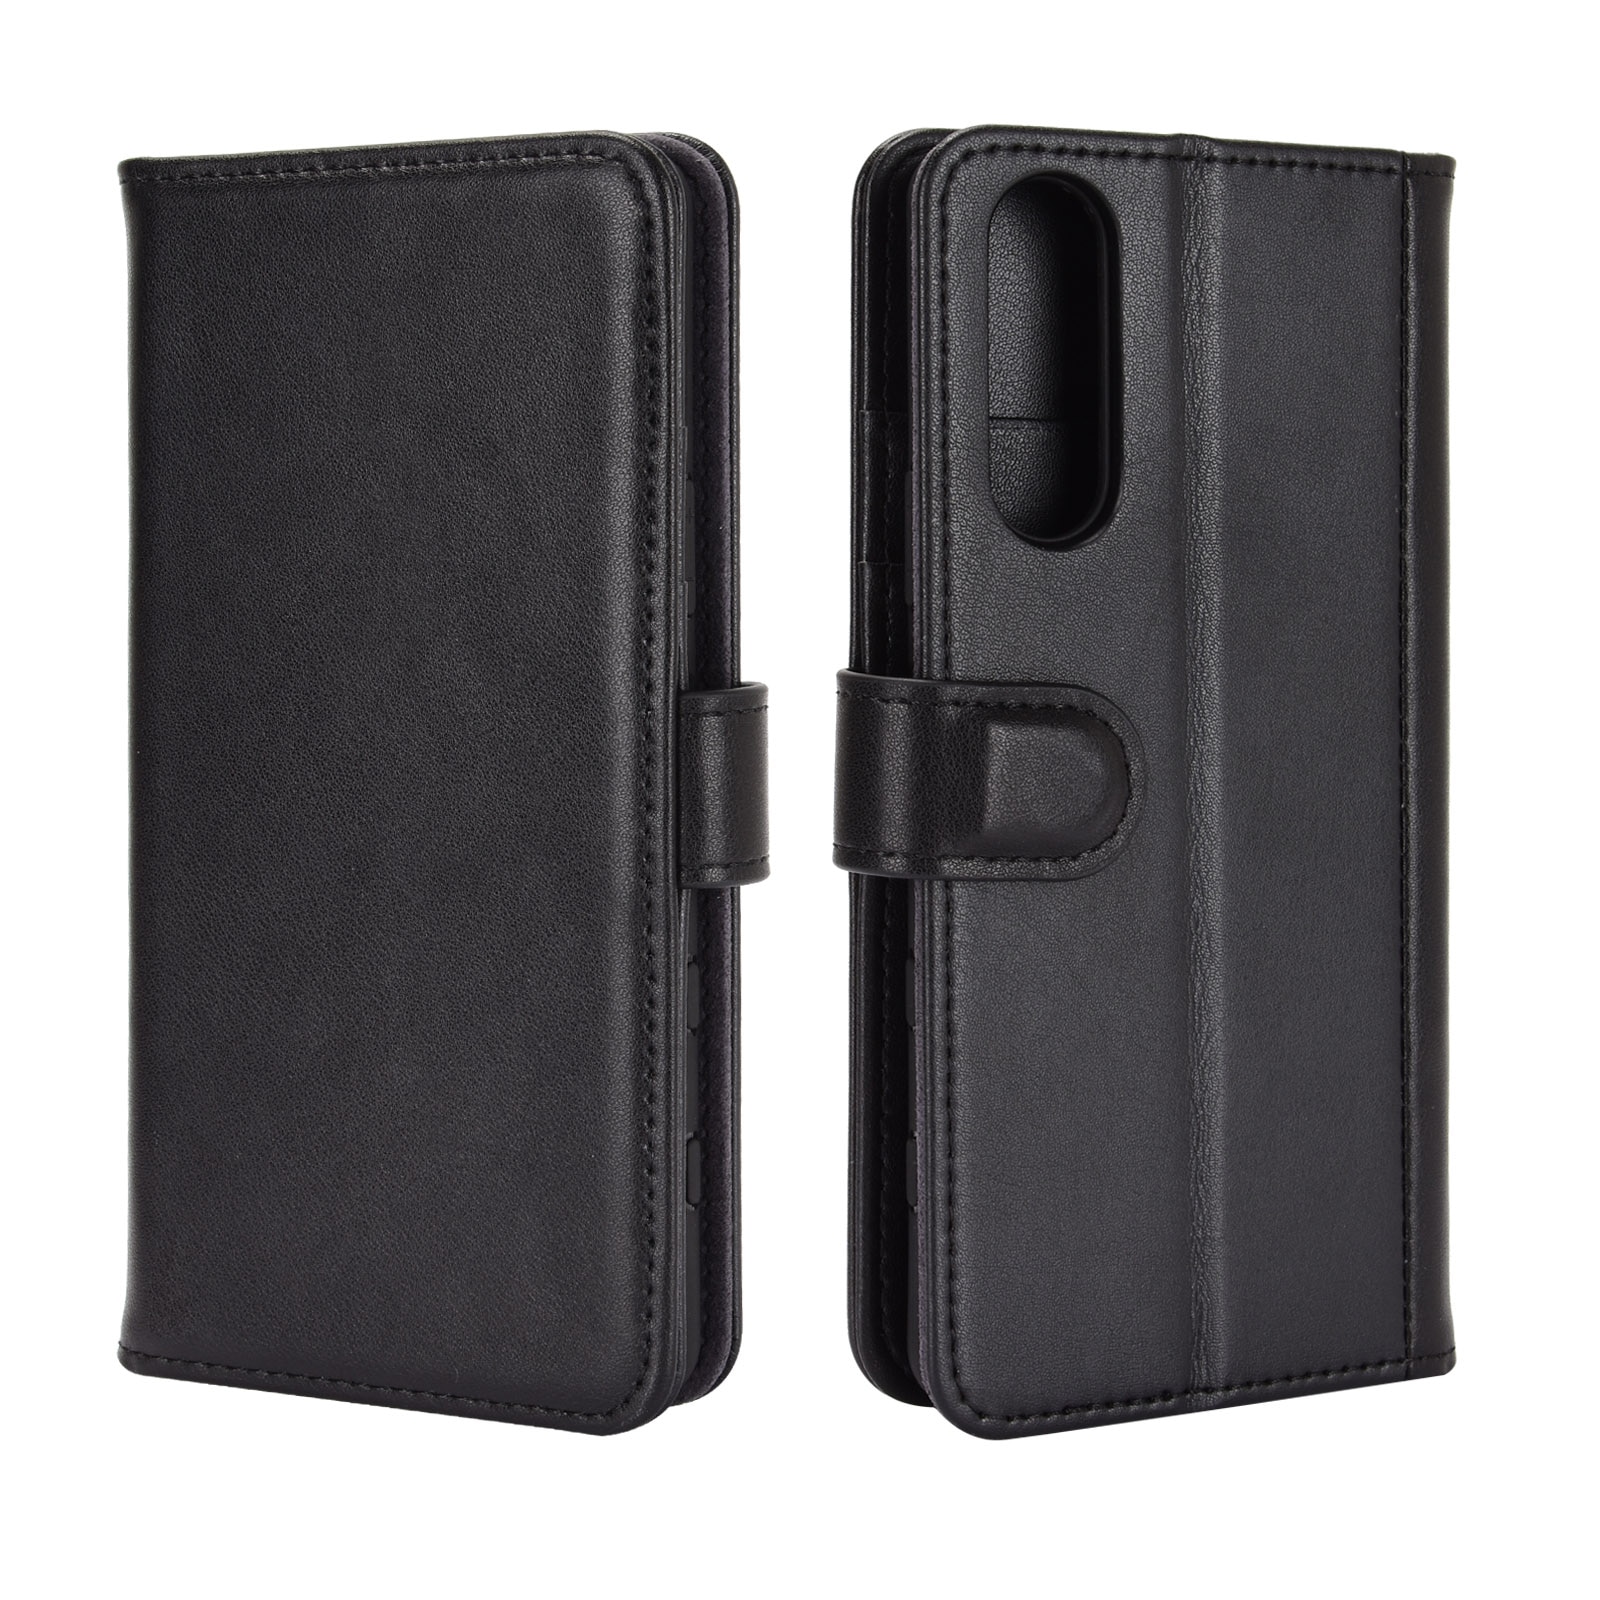 Sony Xperia 10 II Genuine Leather Wallet Case Black